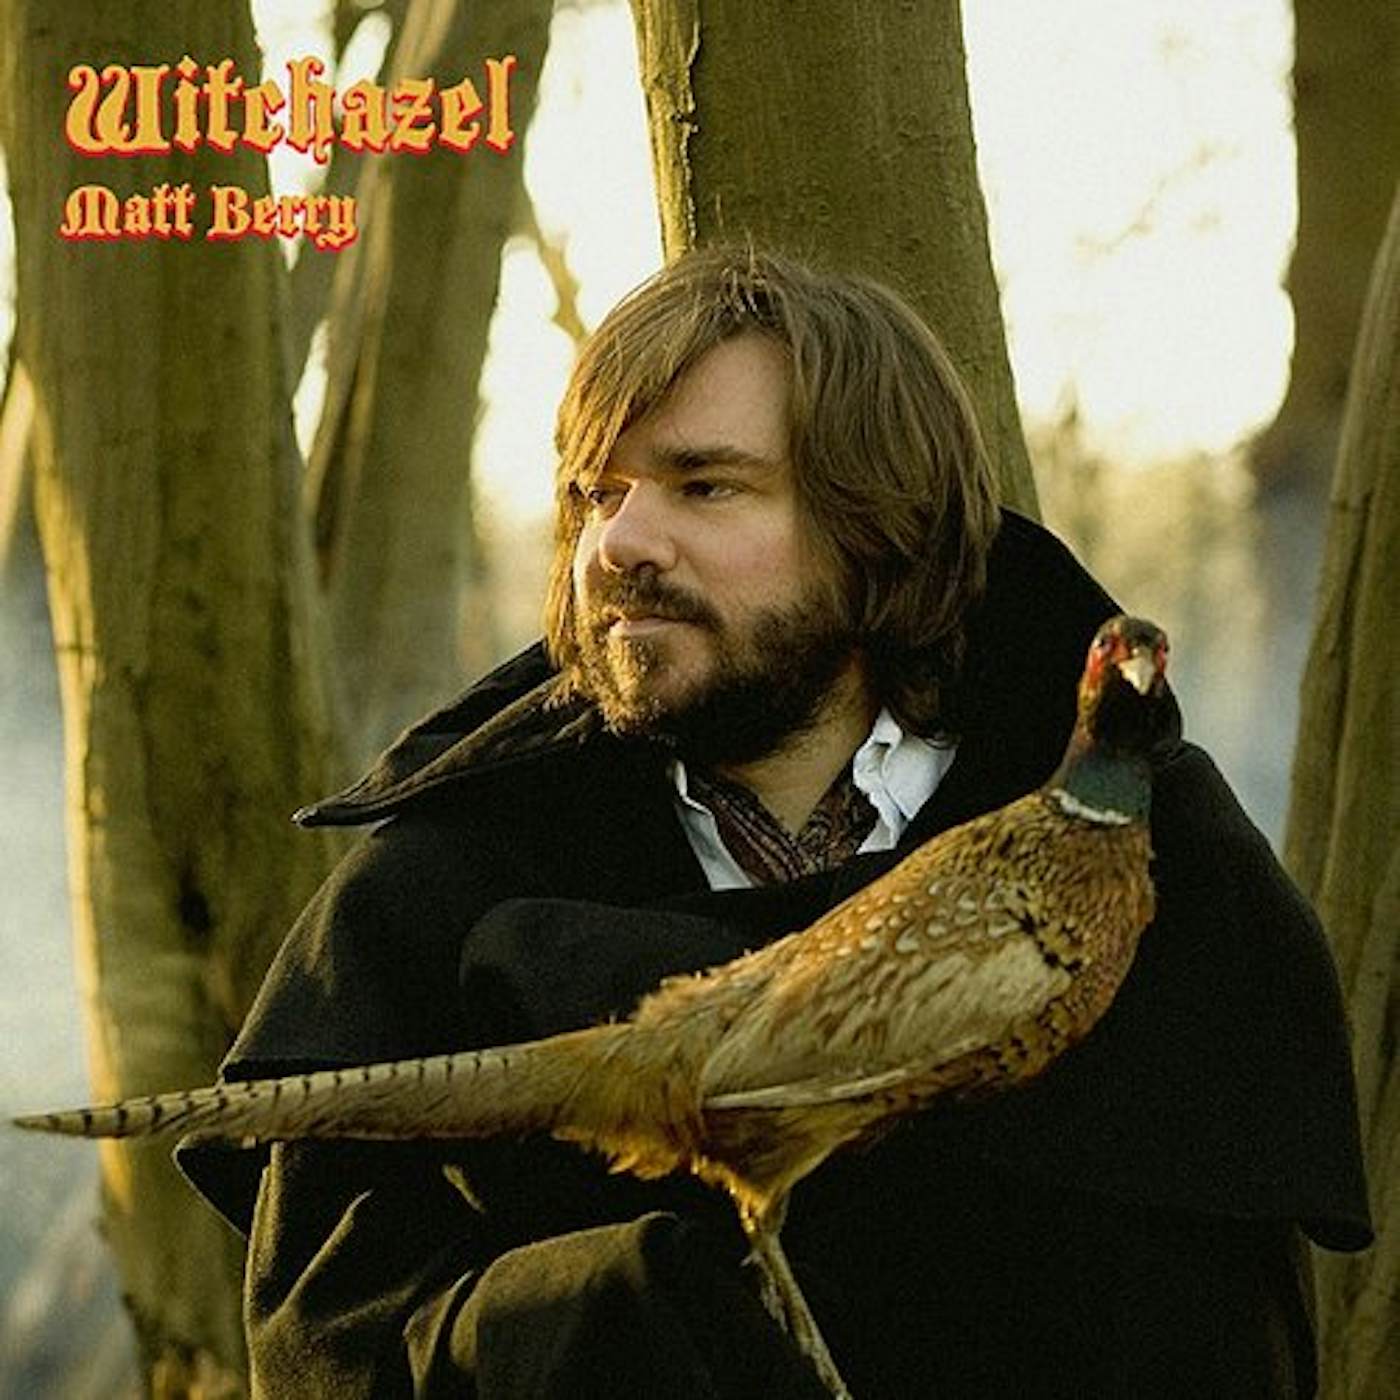 Matt Berry WITCHAZEL (Limited Edition Caramel Vinyl)